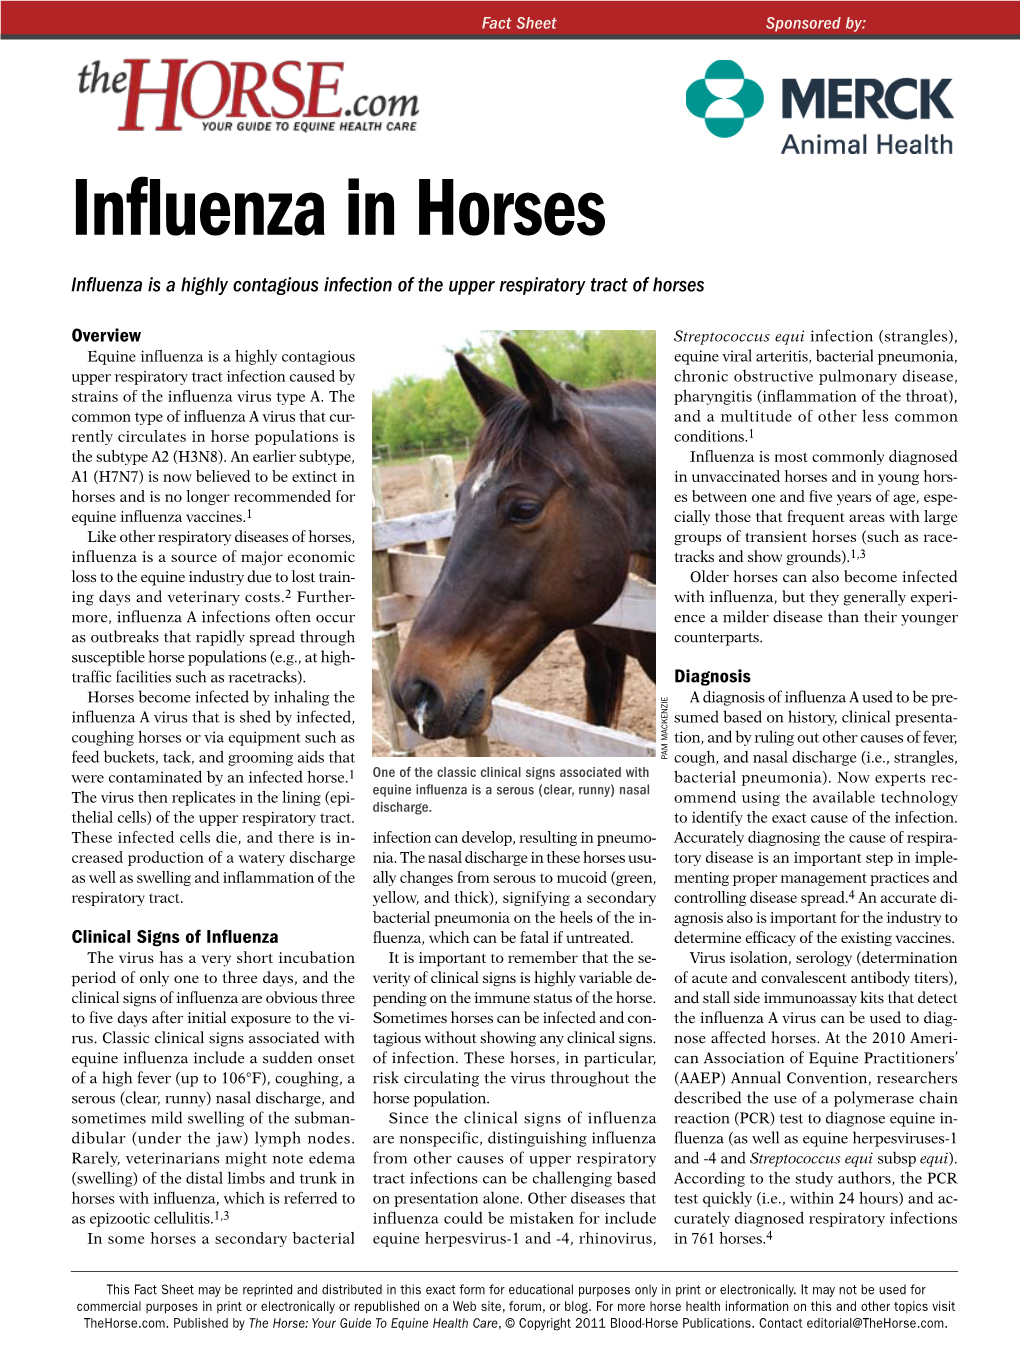 Equine Influenza